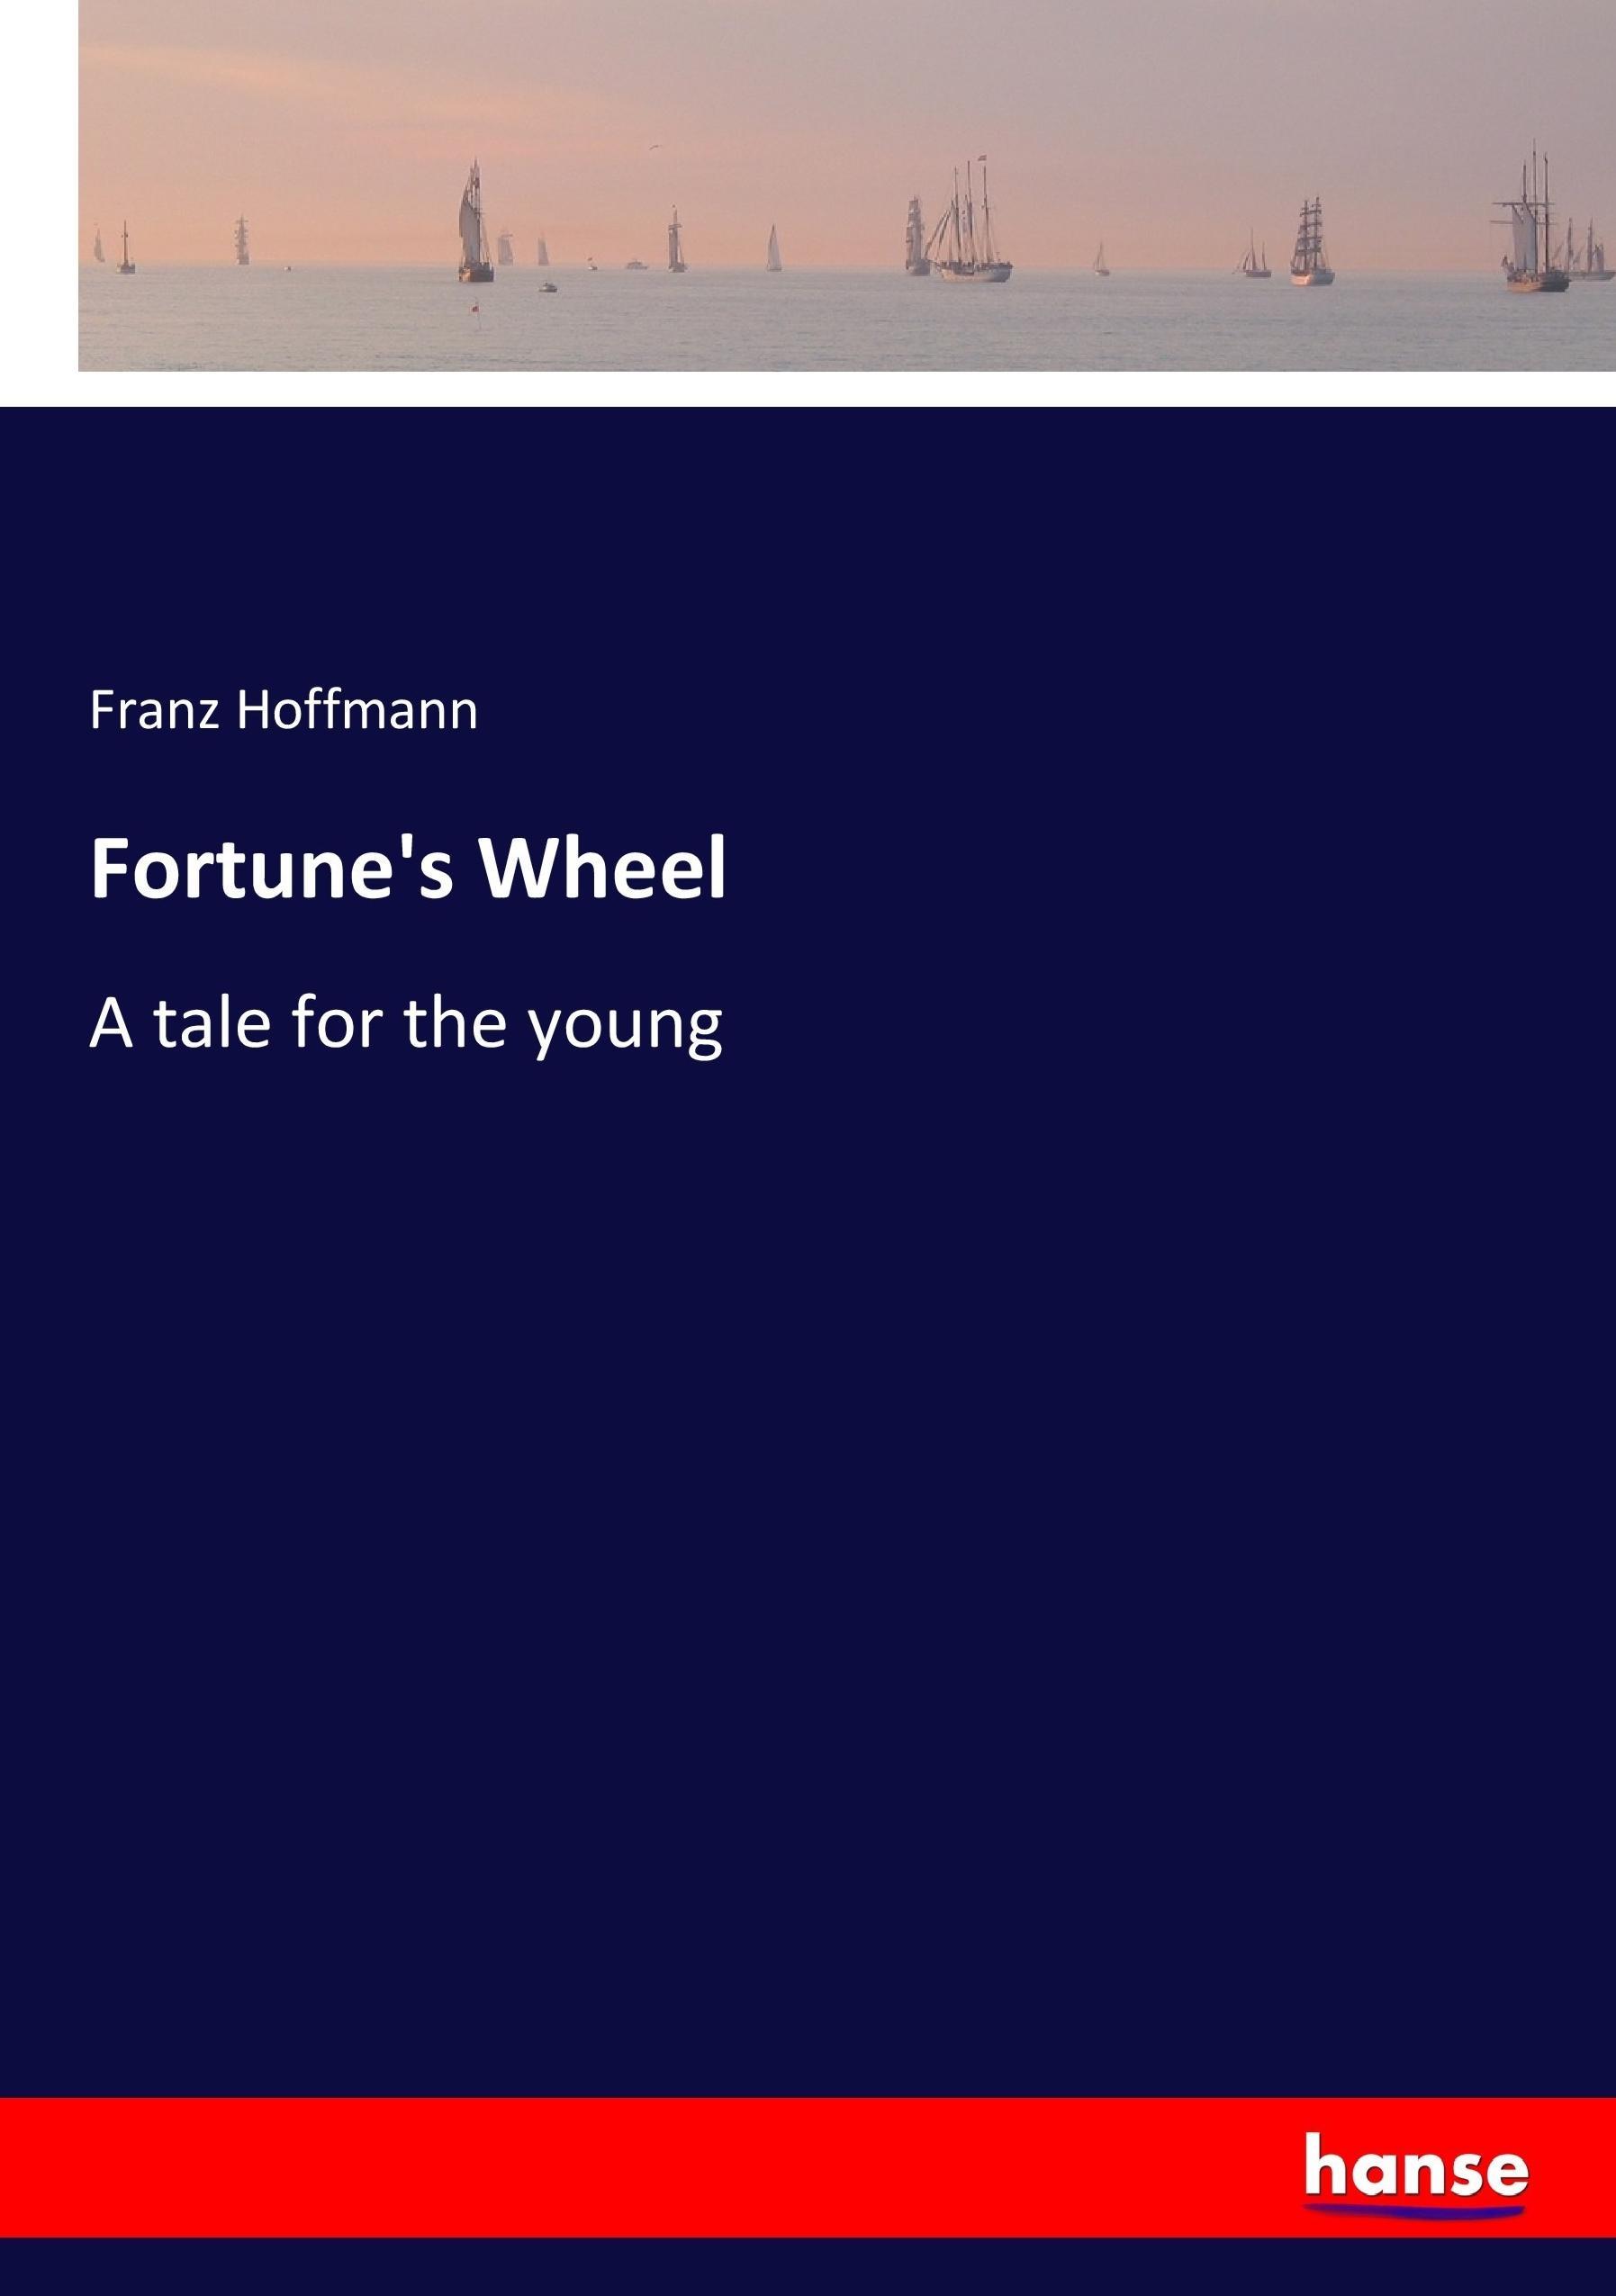 Fortune's Wheel | A tale for the young | Franz Hoffmann | Taschenbuch | Paperback | 212 S. | Deutsch | 2017 | hansebooks | EAN 9783744684378 - Hoffmann, Franz